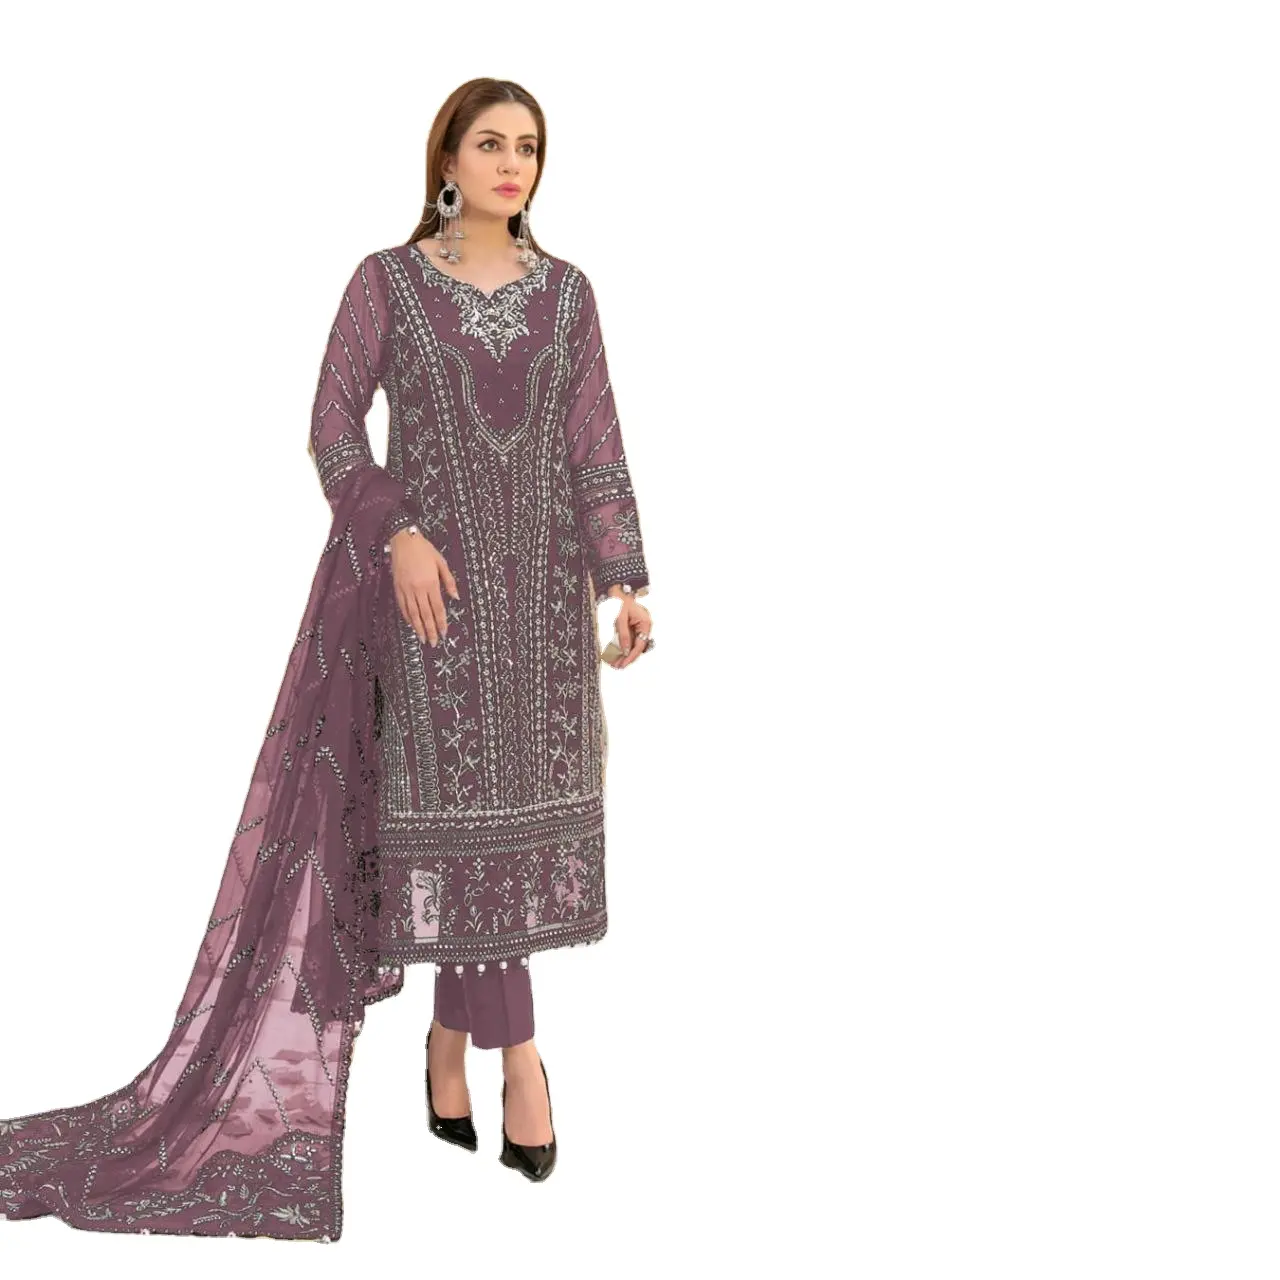 Ultima collezione di Design di tendenza pesante Georgette Salwar Kameez per le donne produttore ed esportatore all'ingrosso dall'India